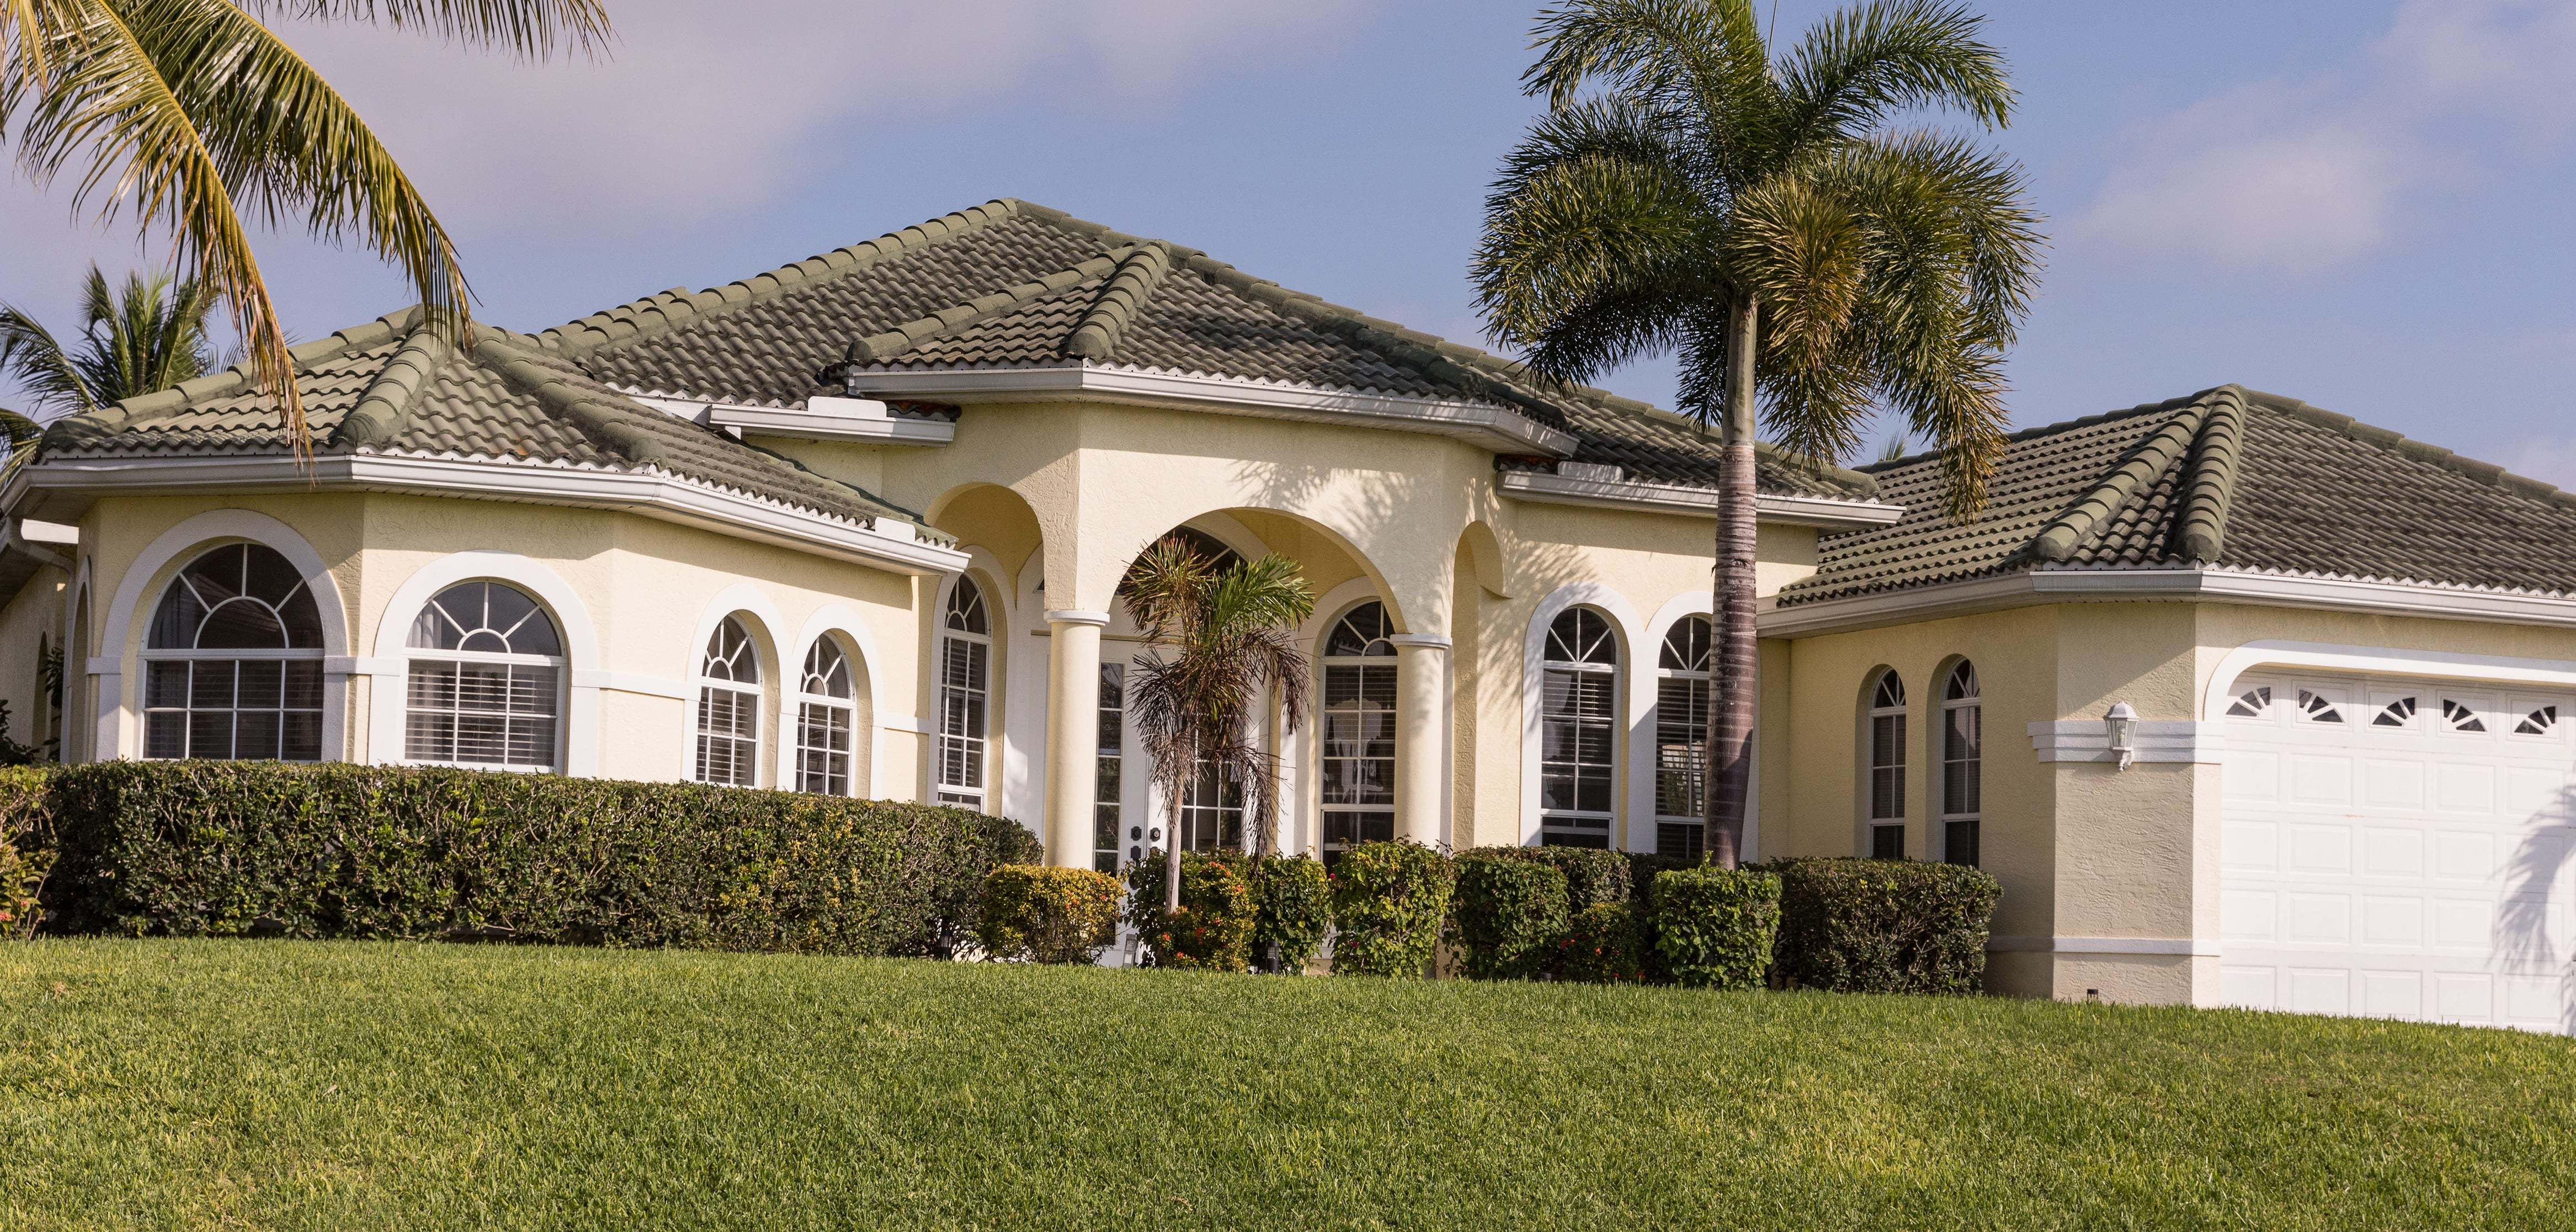 Typical Mediterranean-inspired luxury home in Imperial Golf Estates, FL.